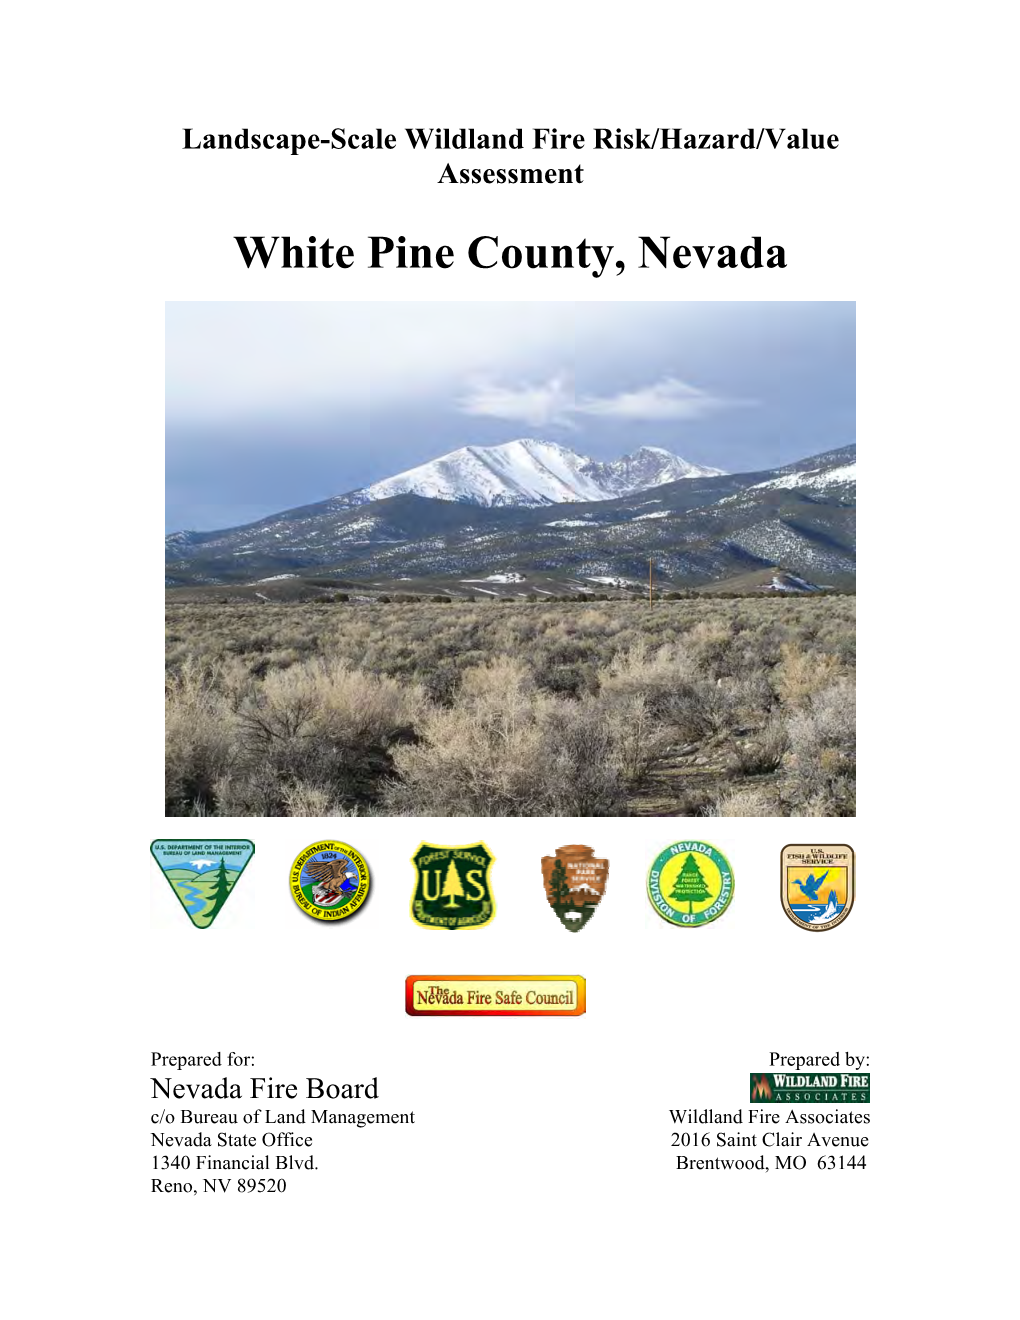 White Pine County, Nevada